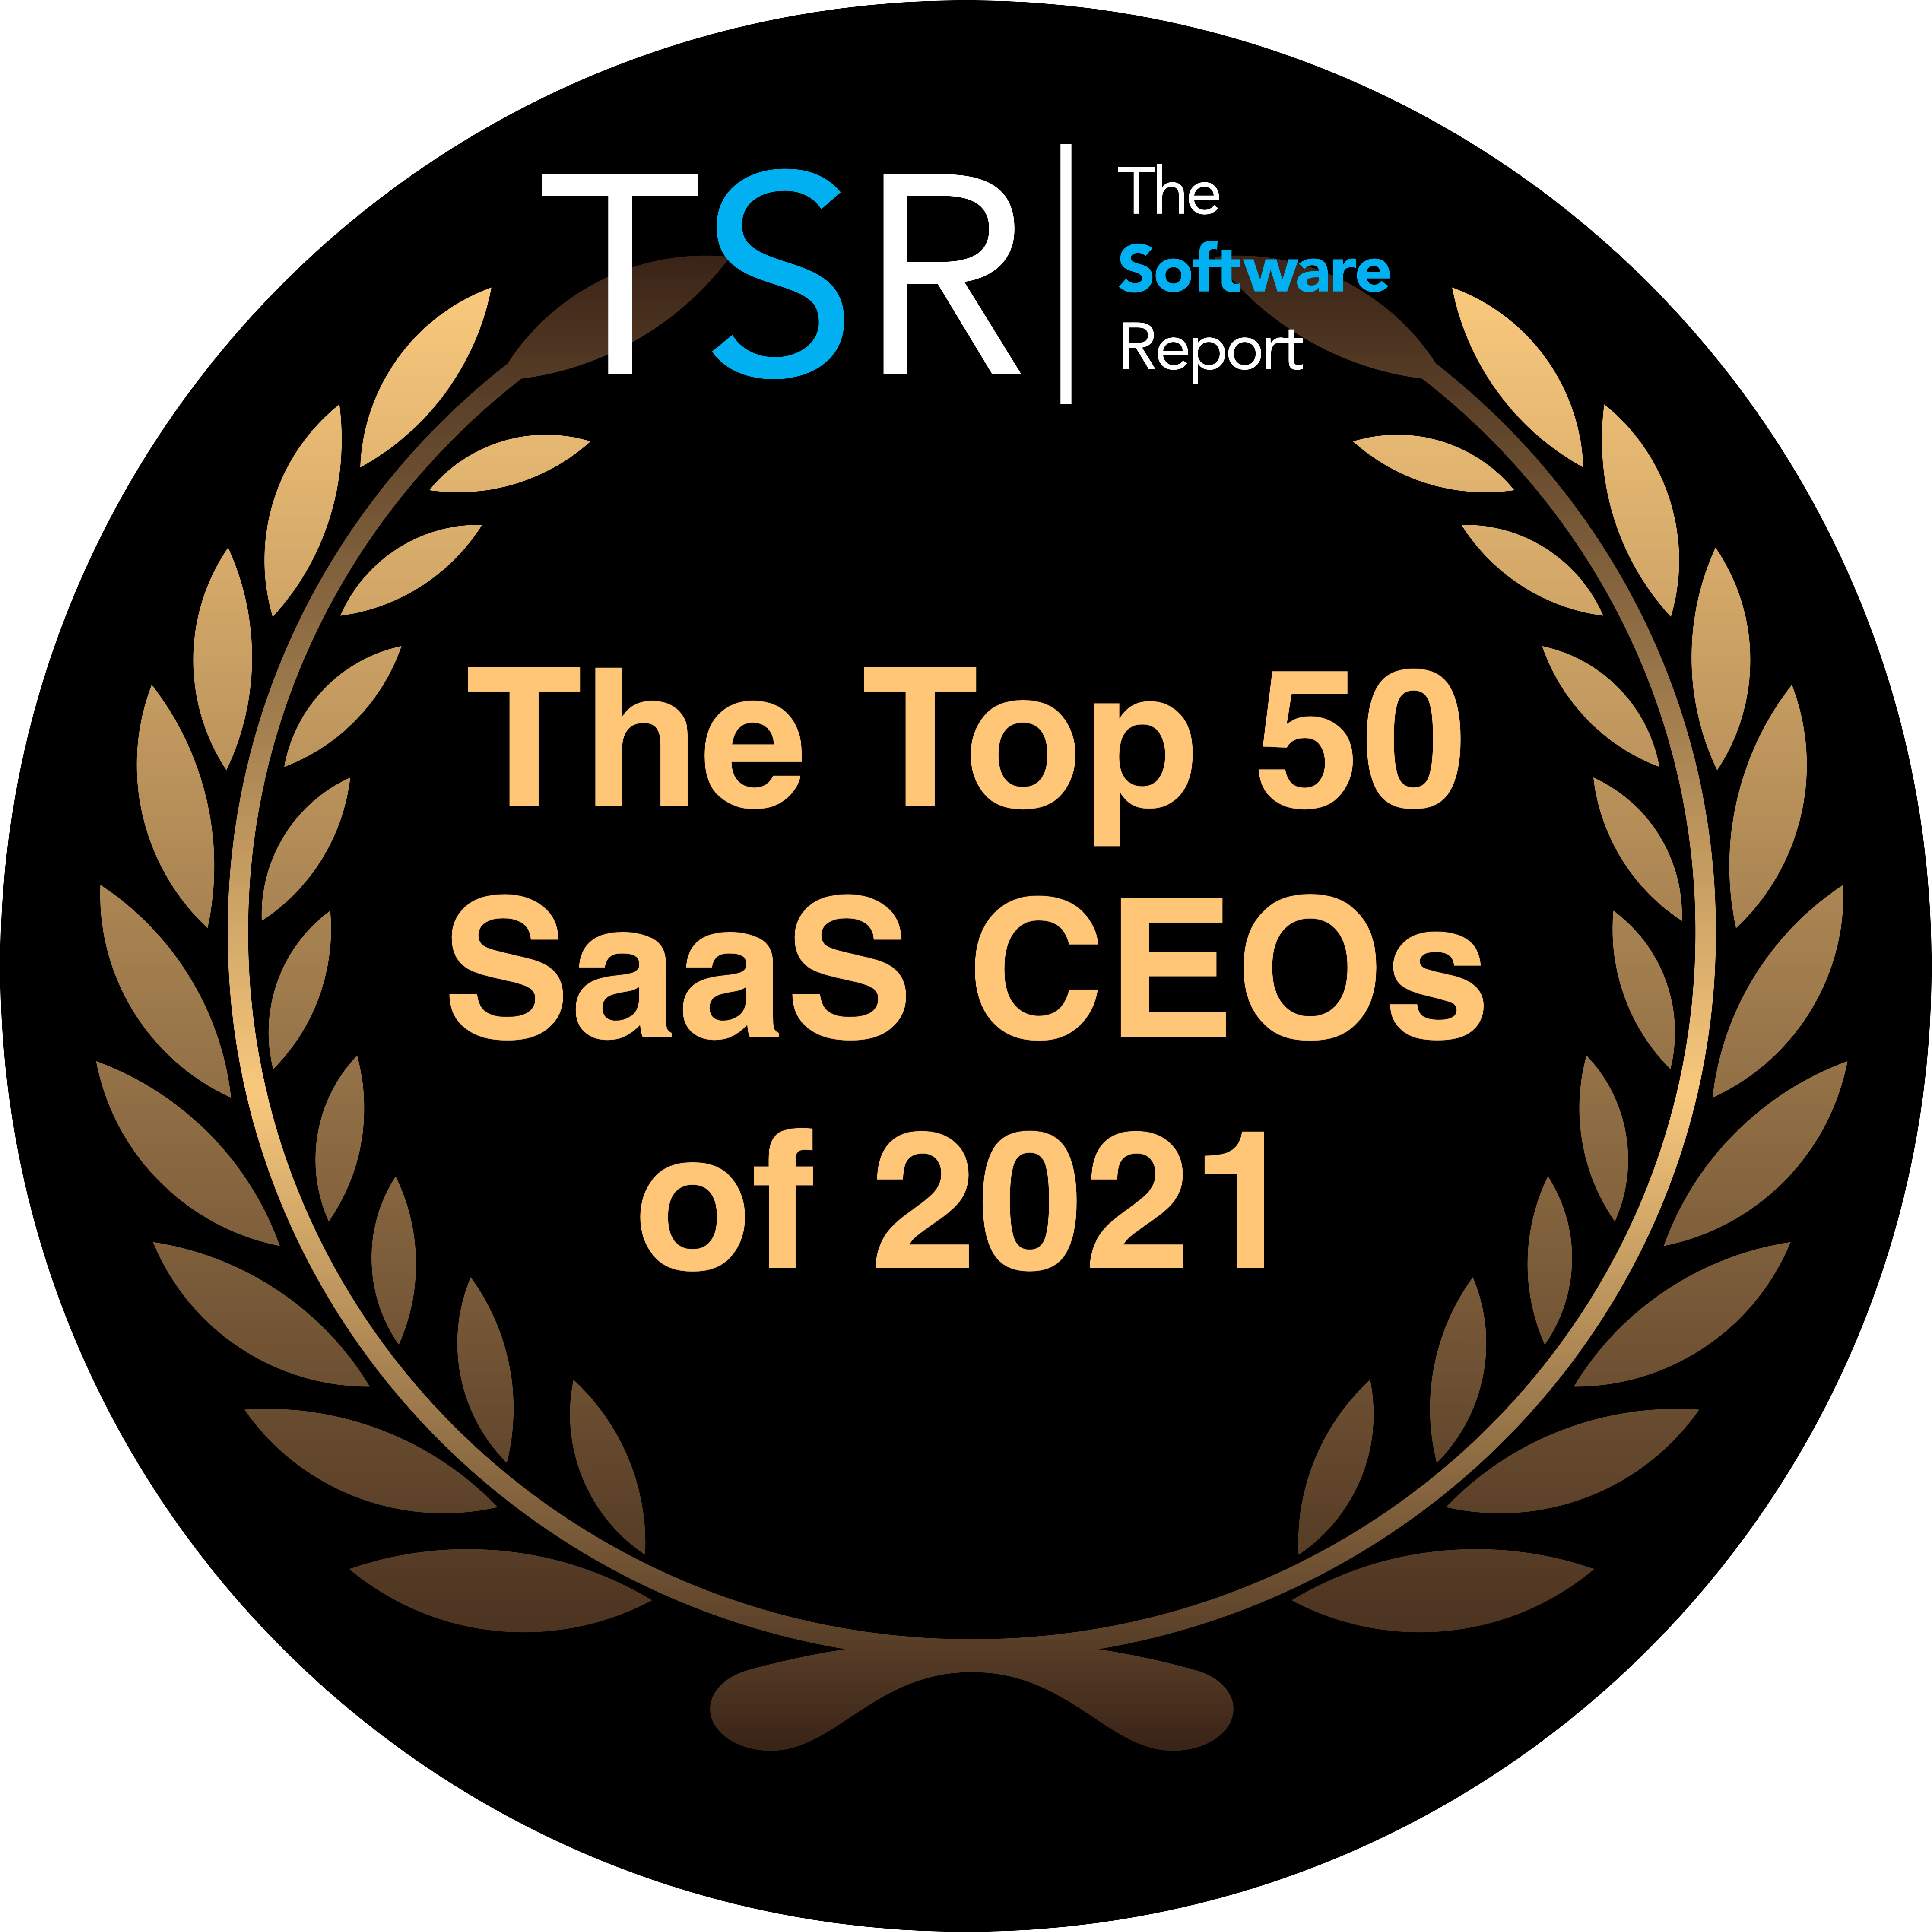 SPS Commerce的阿奇•布萊克於2021年成為SaaS頂級CEO